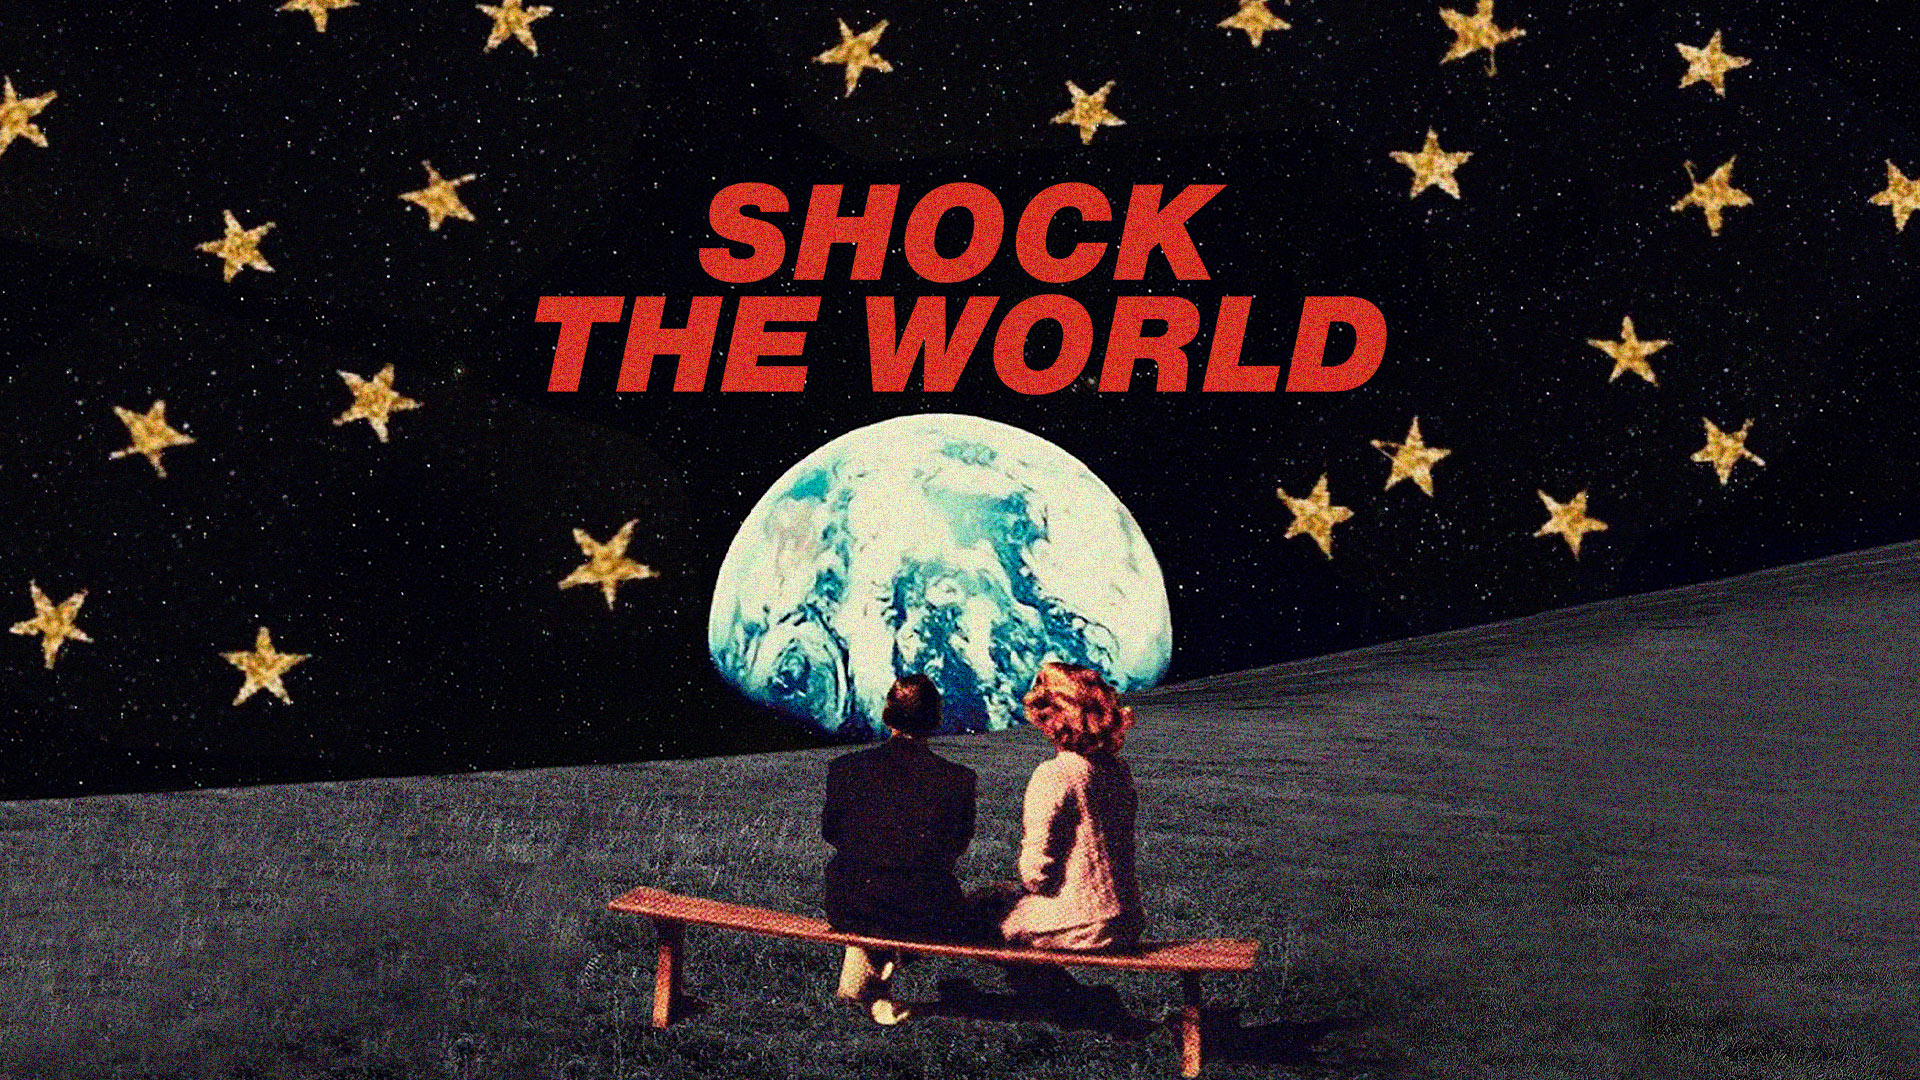 SHOCK THE WORLD